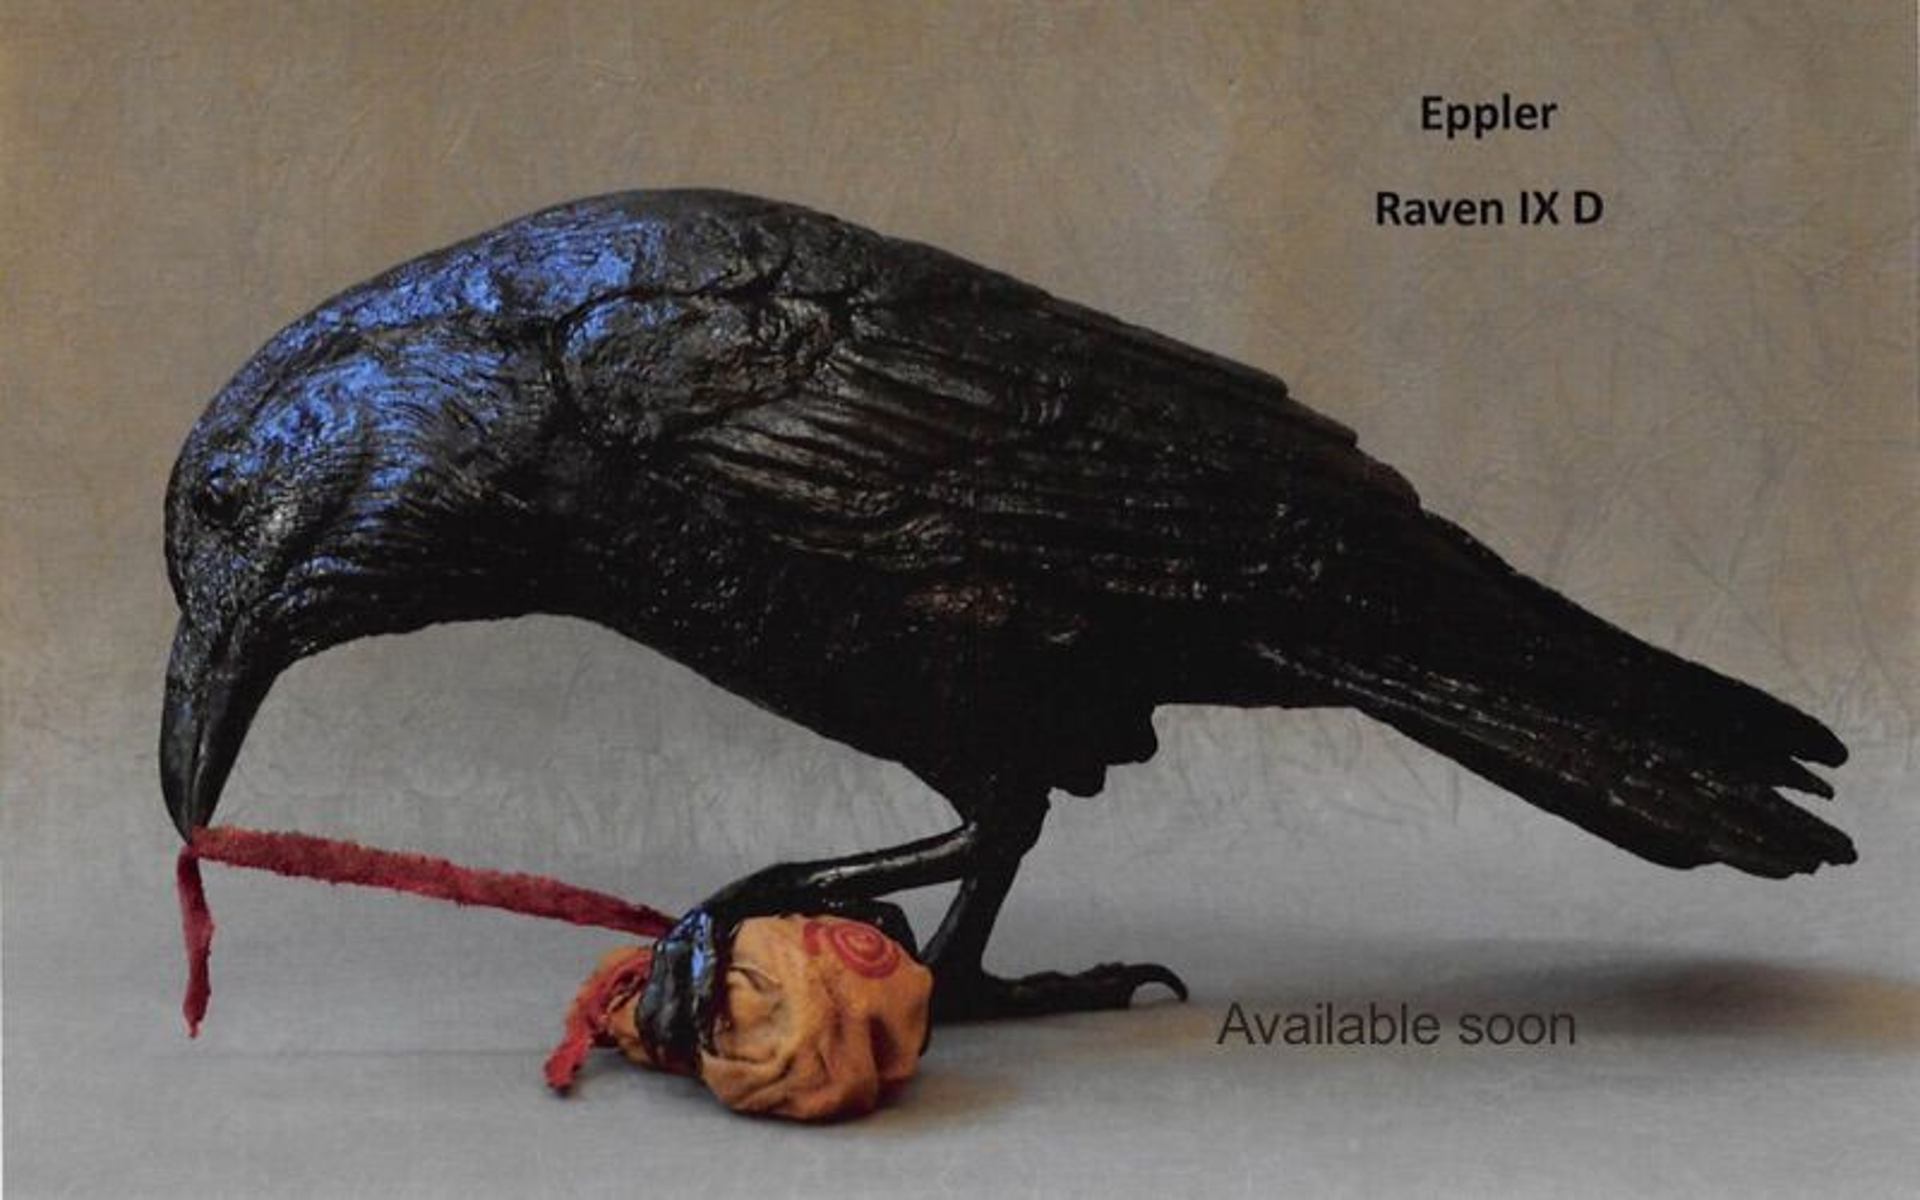 Raven IX D by Jim Eppler